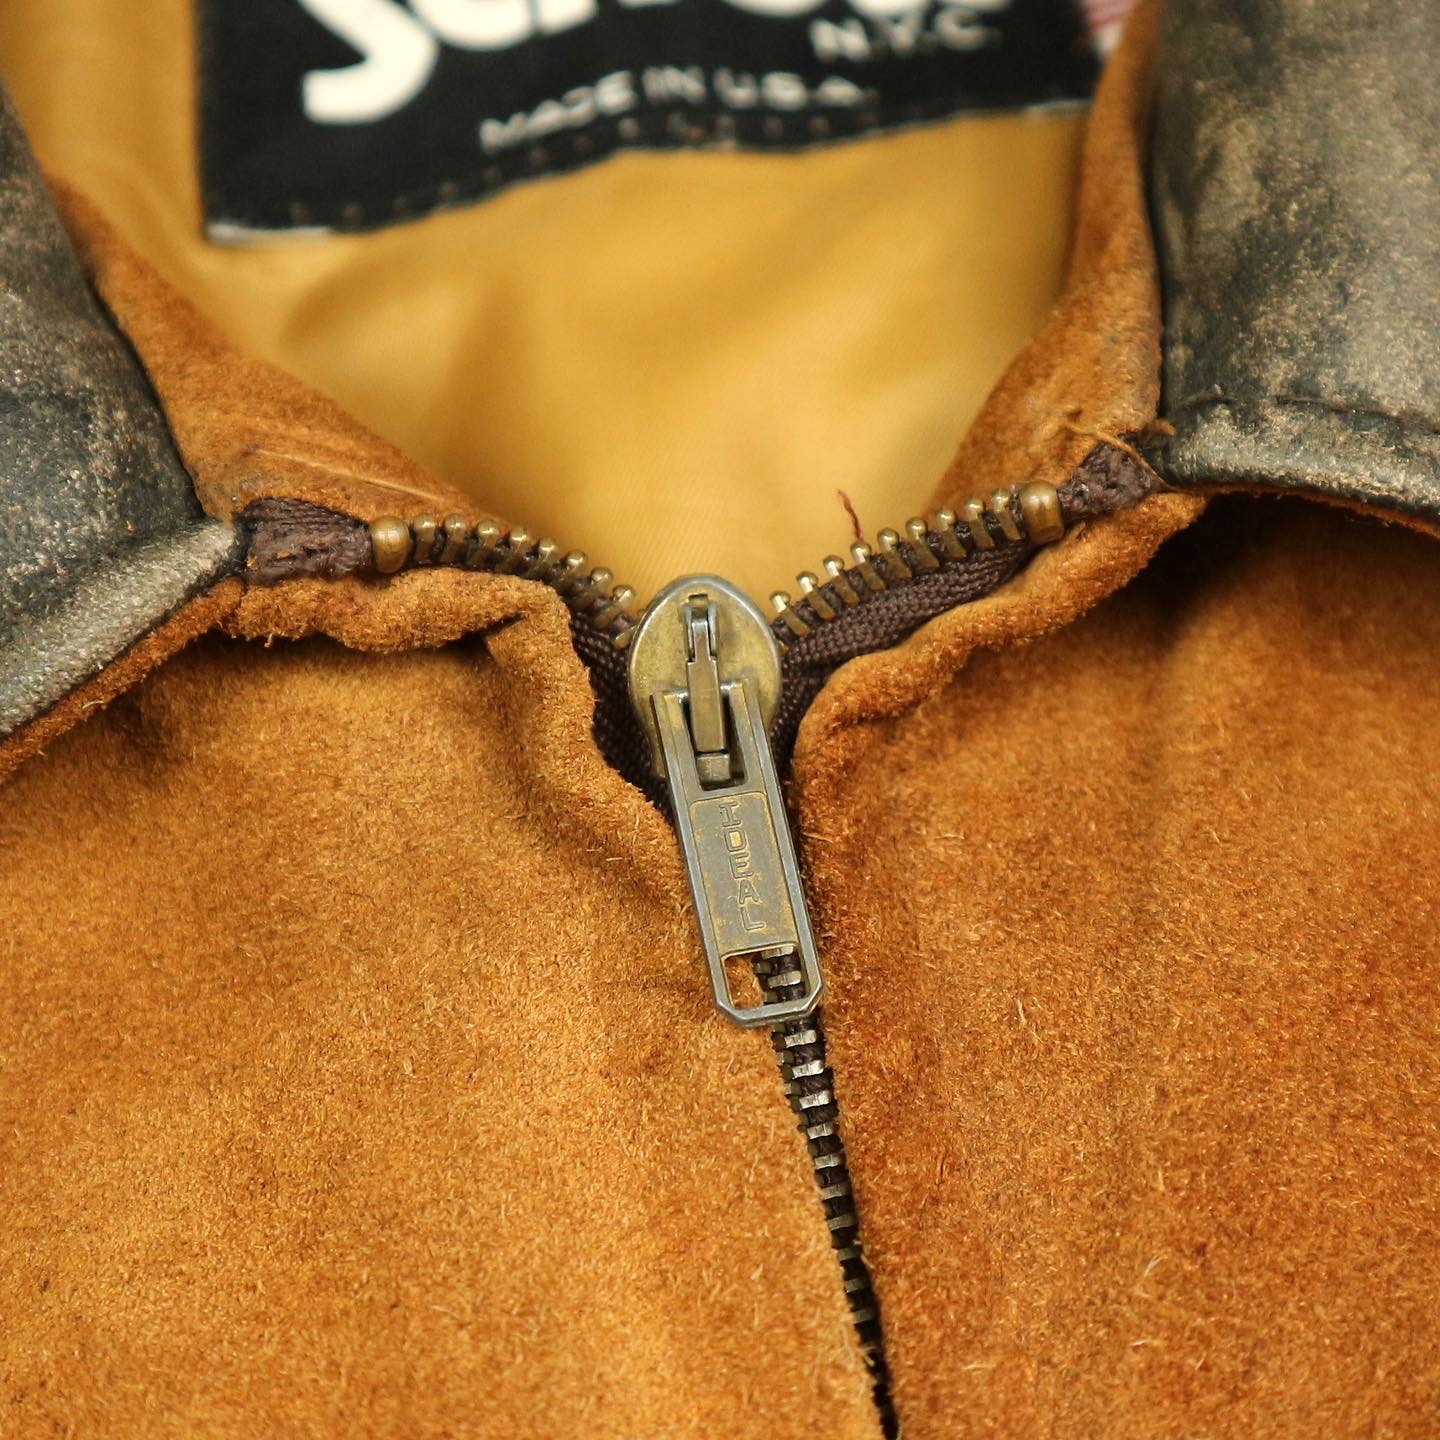 Schott Suede Leather-collar Jacket Size L